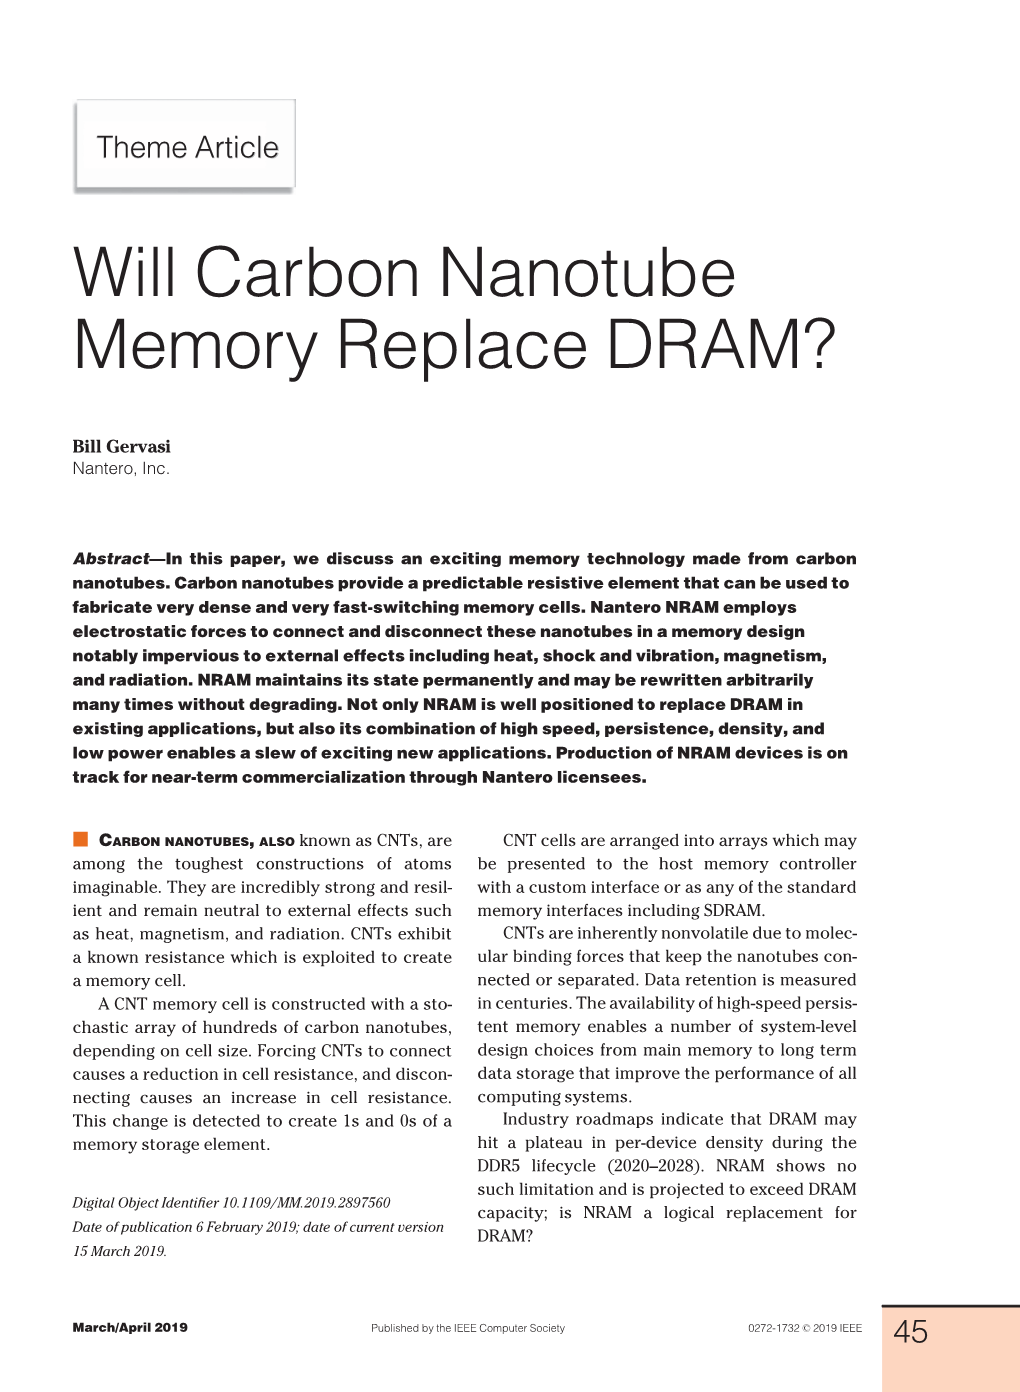 Will Carbon Nanotube Memory Replace DRAM?